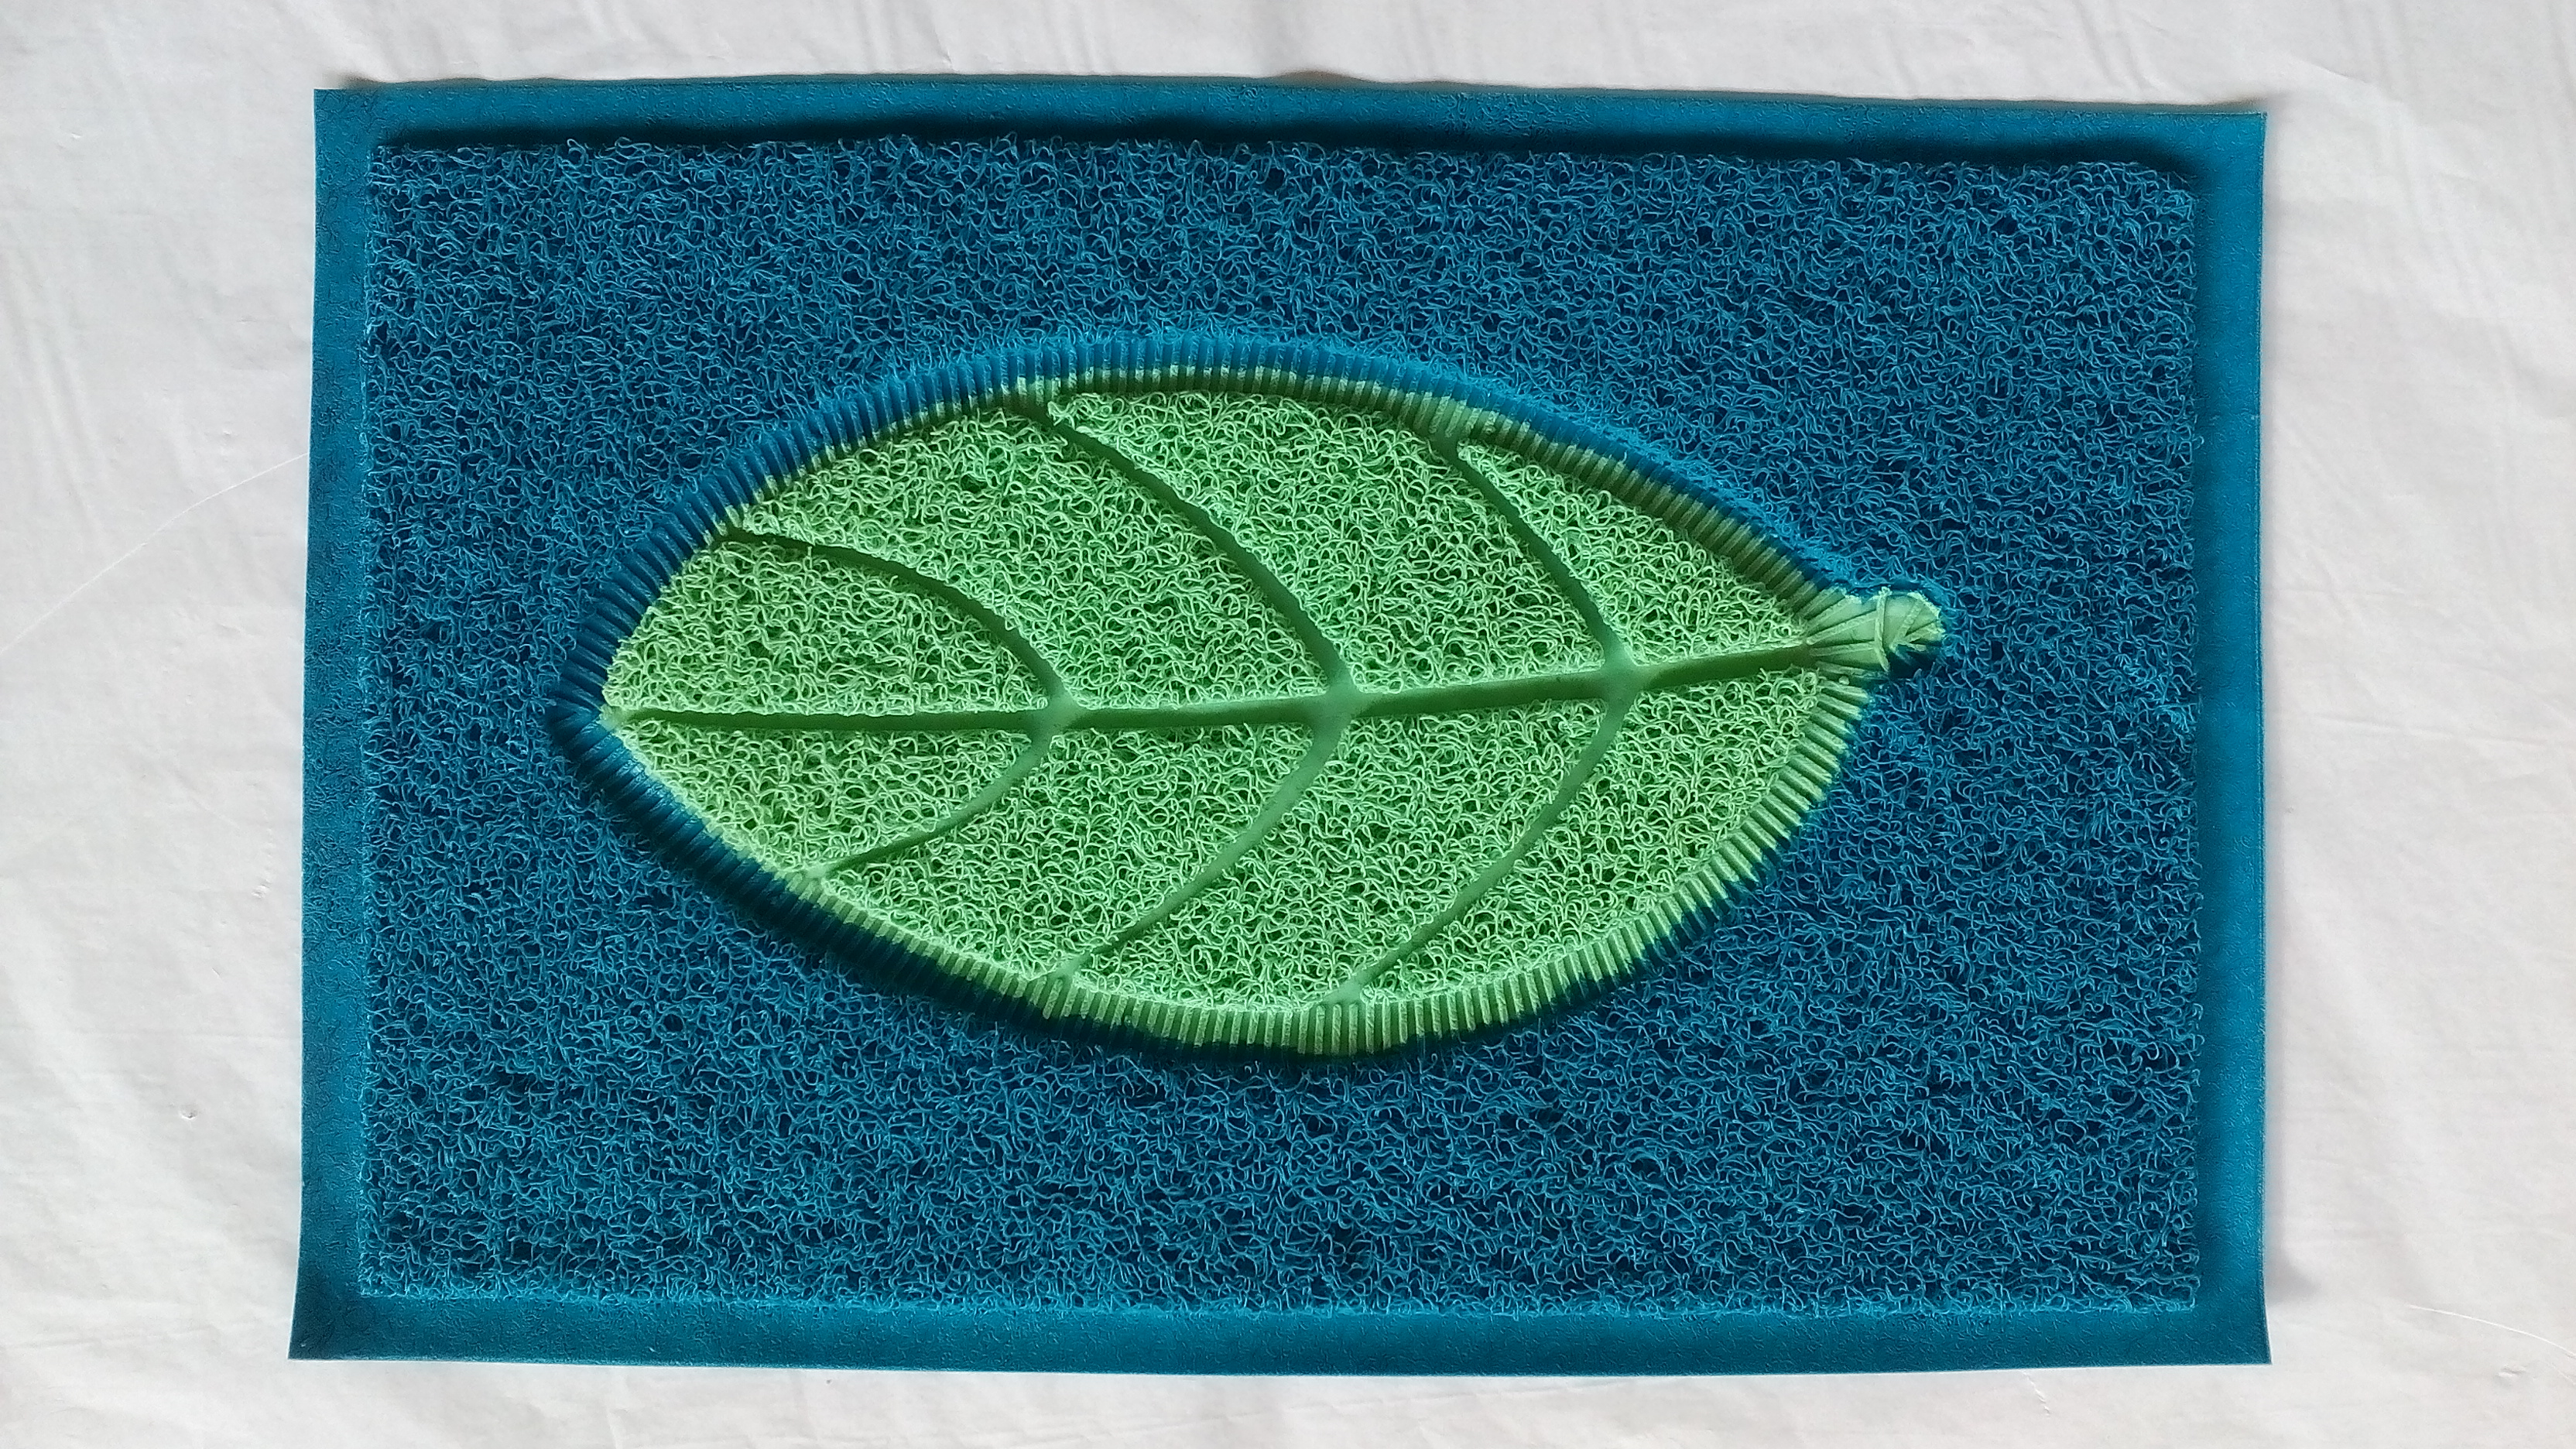 Koupelnová předložka - rohožka modrá, LIST zelený UNISON 40 x 60 cm UN 3445 